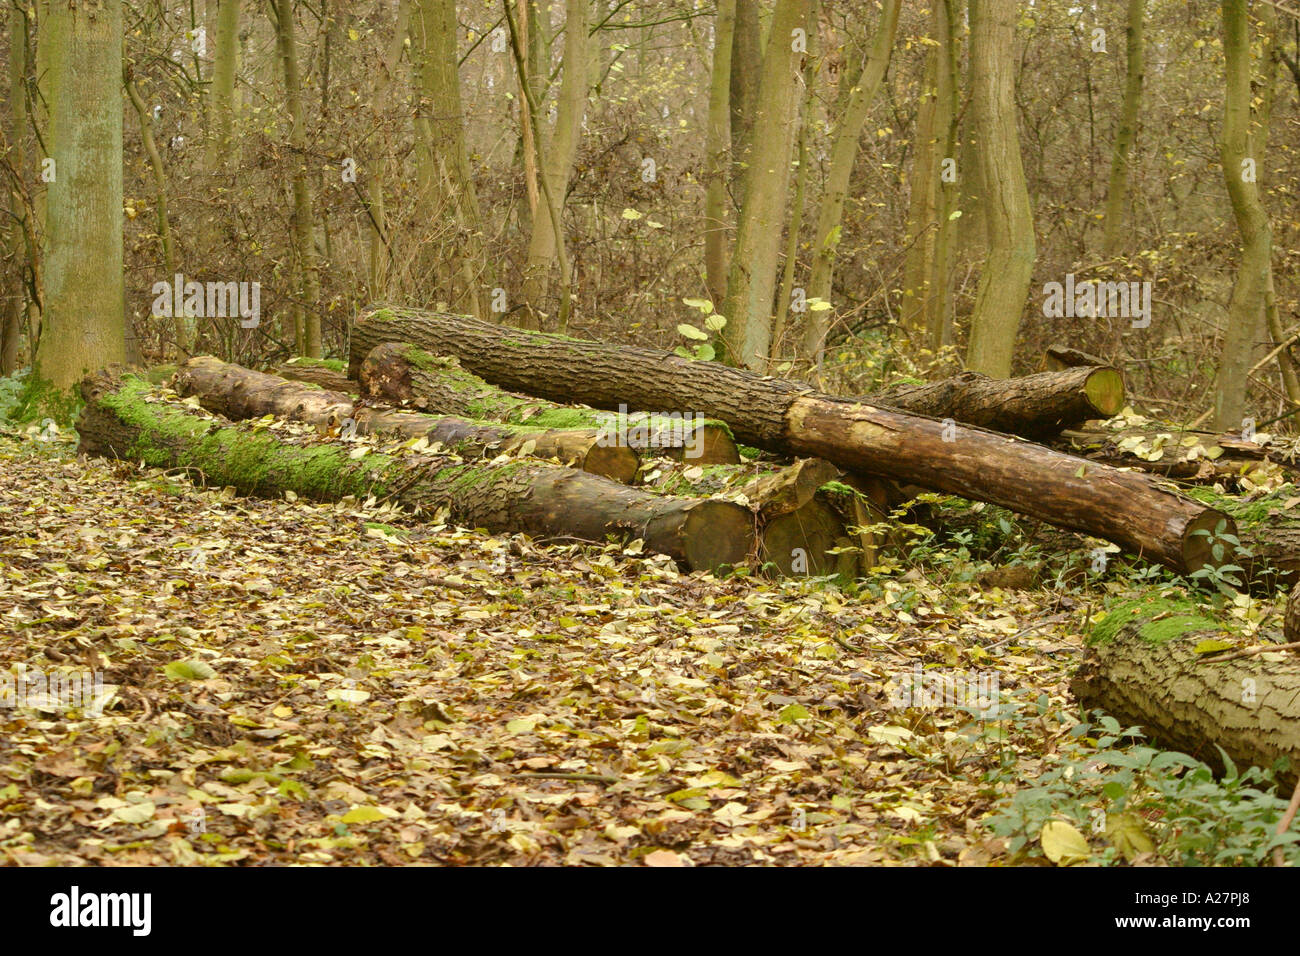 Log Pile in Wildlife Trust Woodland Providing Habitat Stock Photo